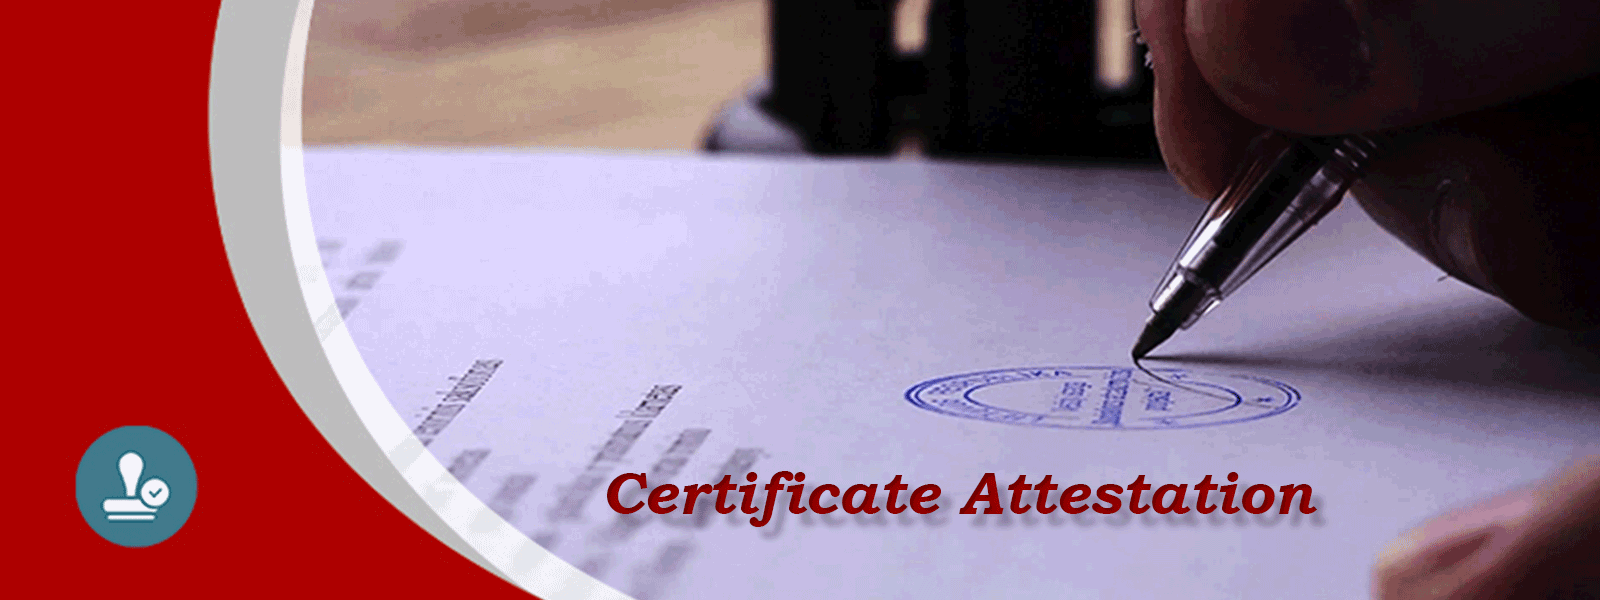 Certificate Attestation in Tamil Nadu